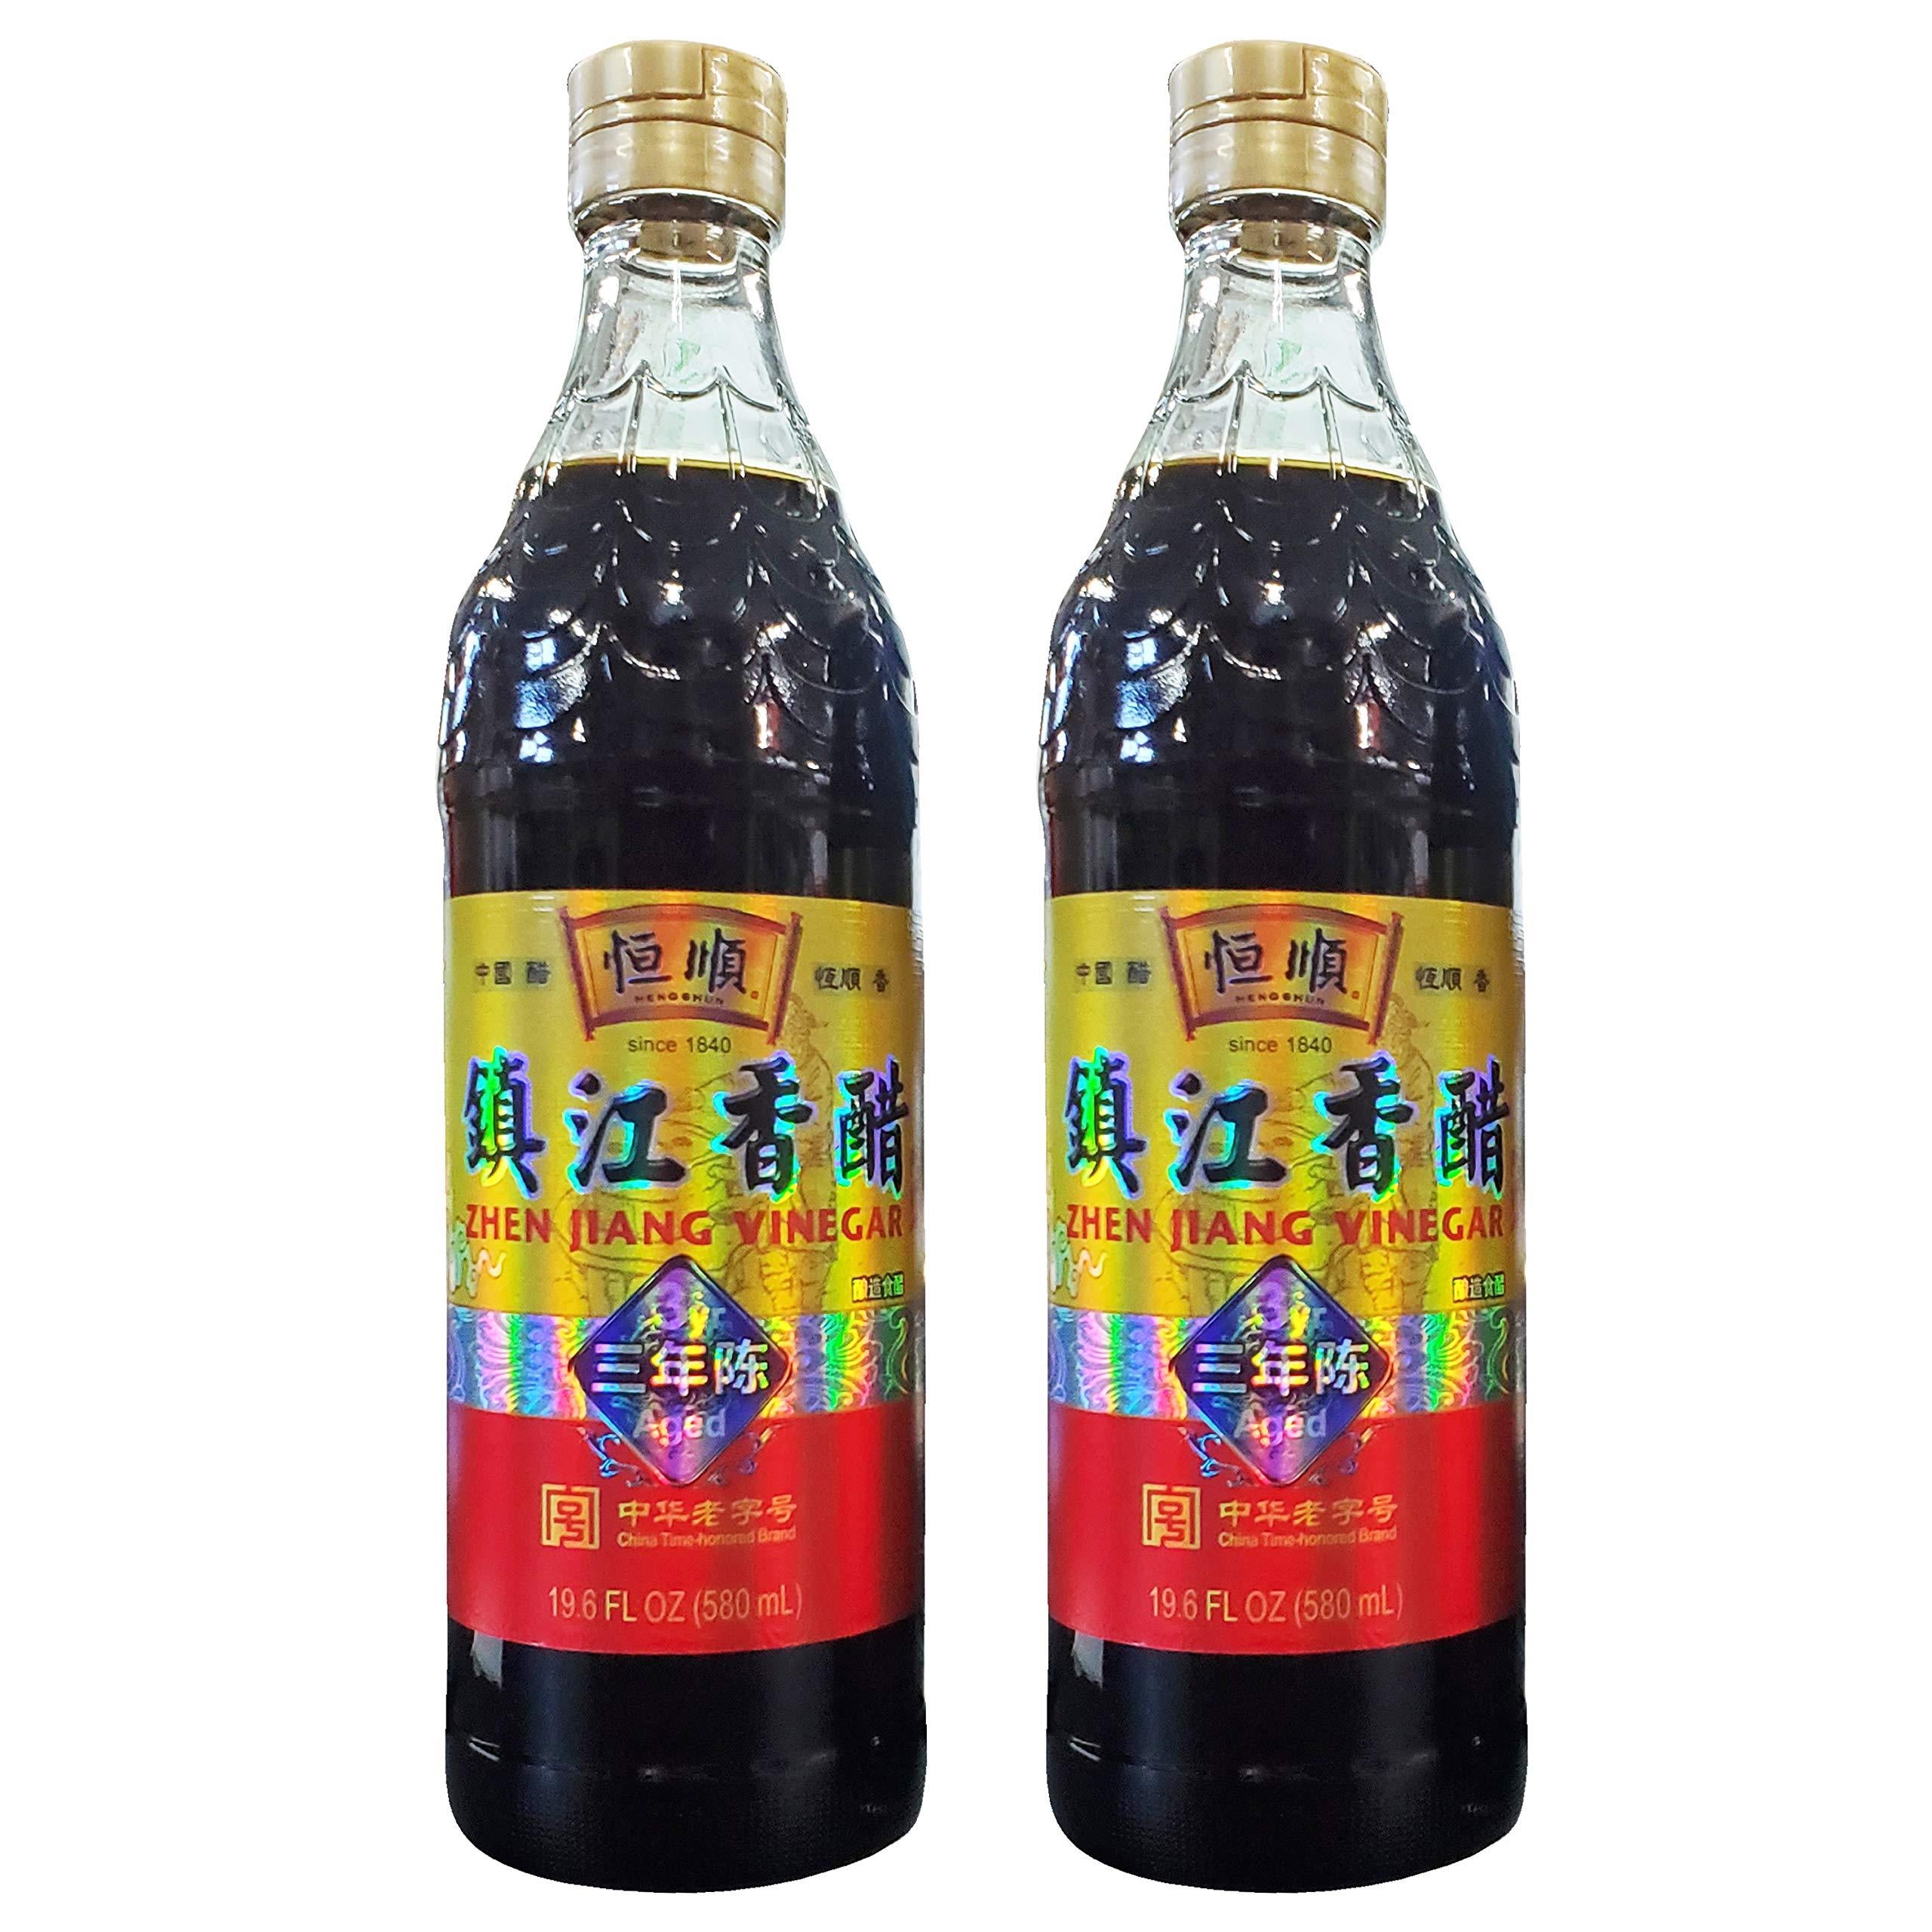 Hengshun ZhenJiang Chinkiang 3 Year Aged Black Vinegar (2 Pack, Total of 39.2fl.oz)